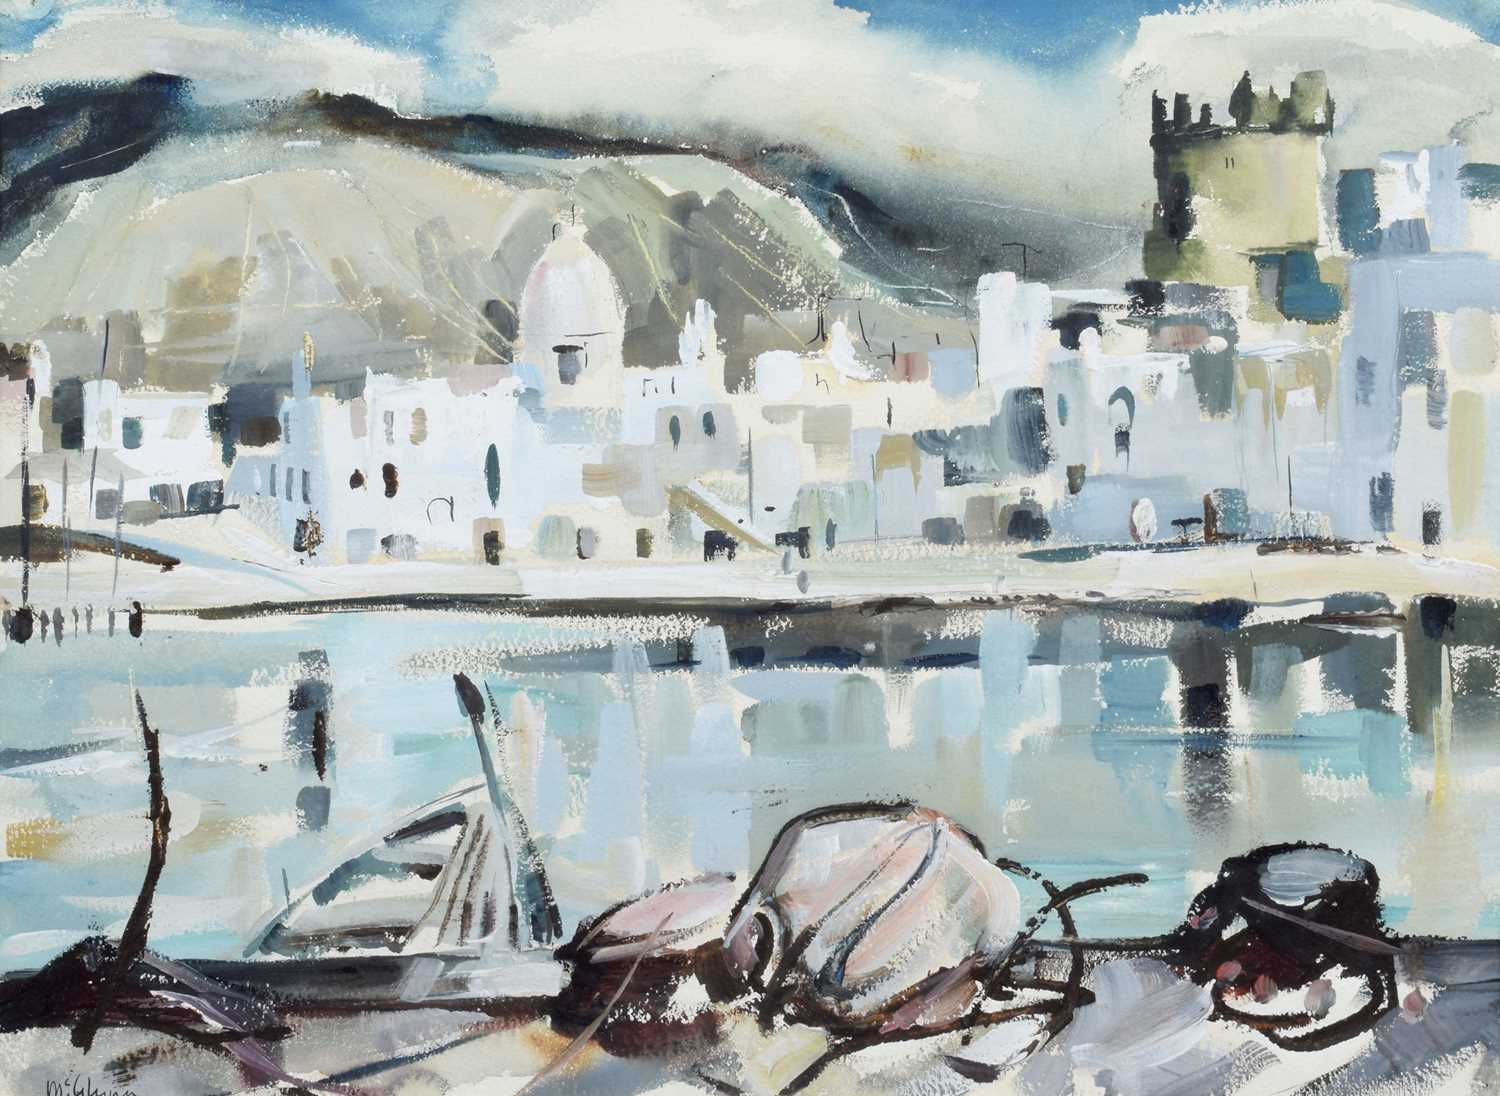 Terry McGlynn (British 1903-1973) "Harbour, Forio"